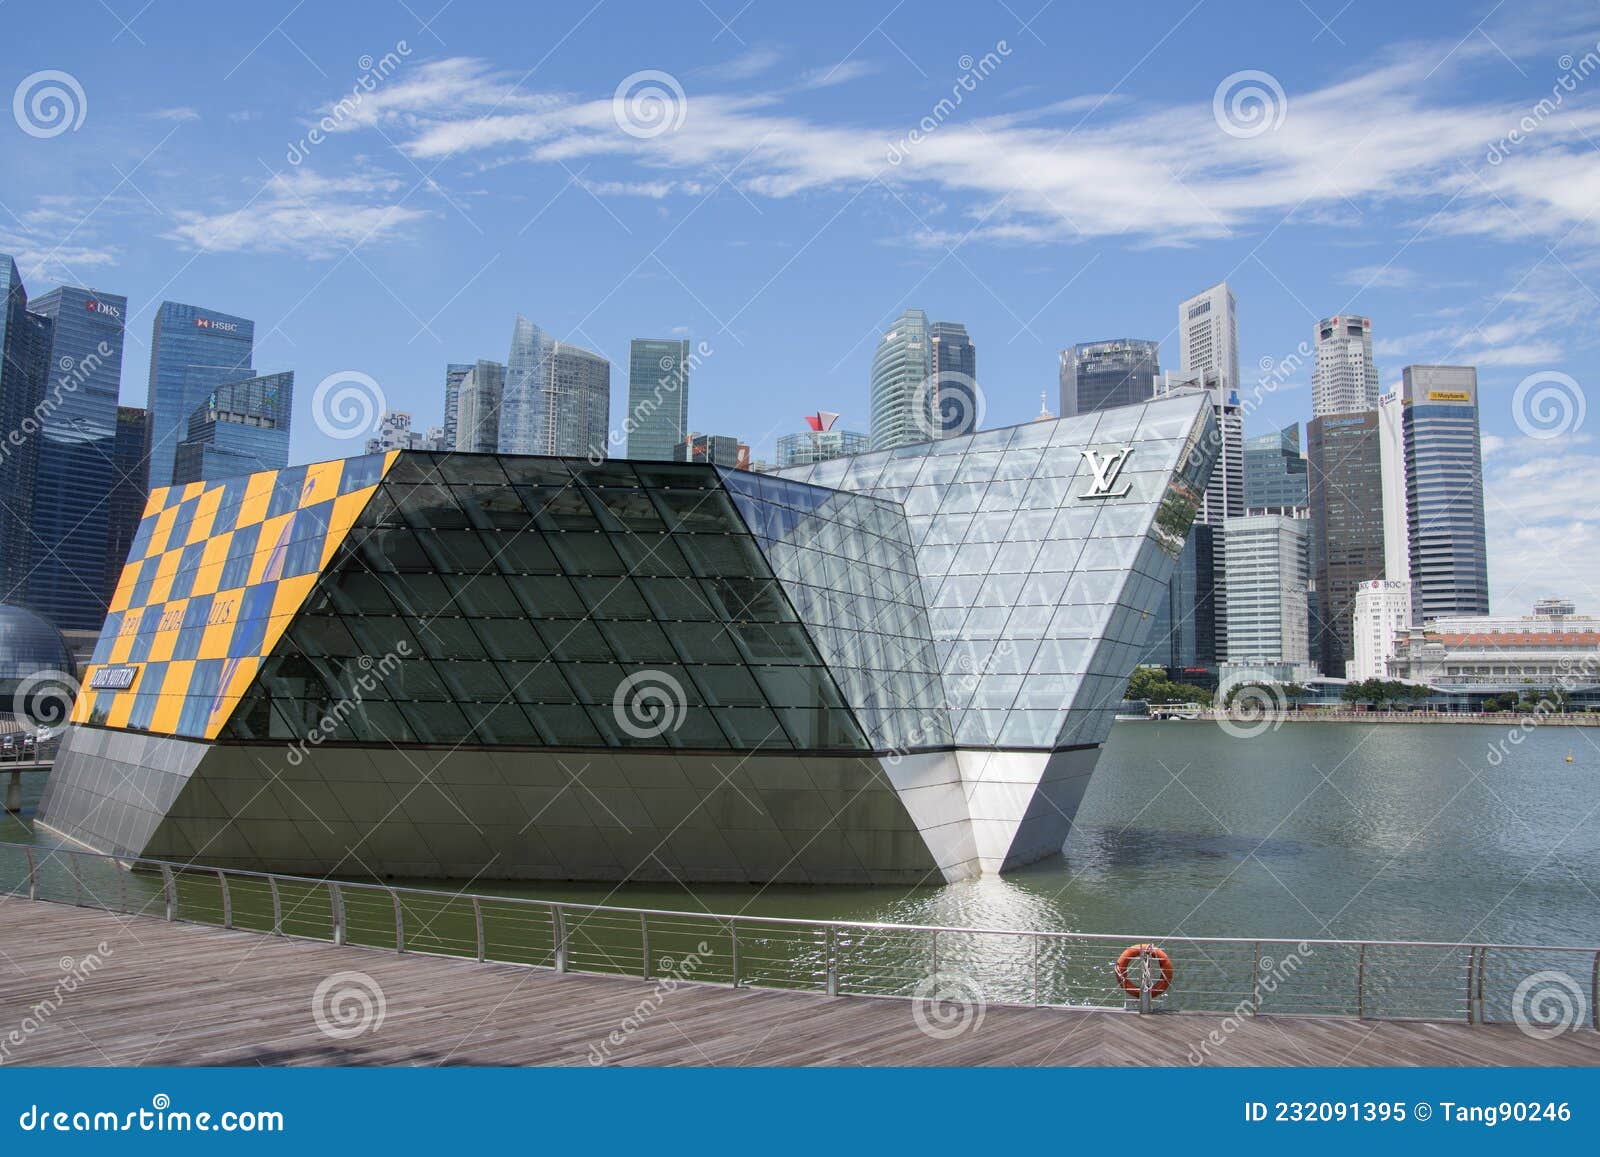 Crystal Pavilion Louis Vuitton Singapore Stock Photo - Download